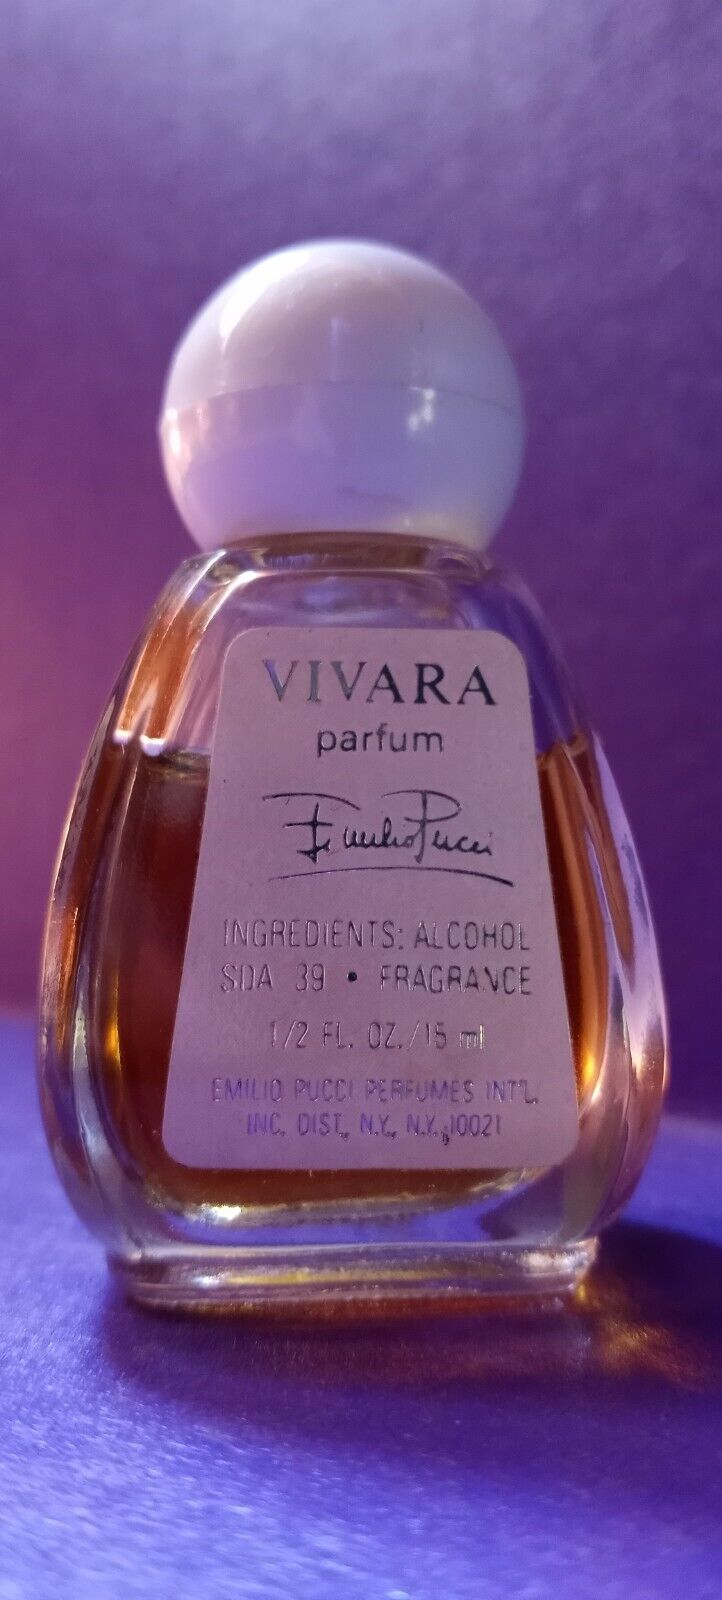 Vintage Vivara Parfum 80% of 1/2 oz bottle by Emillo Pucci